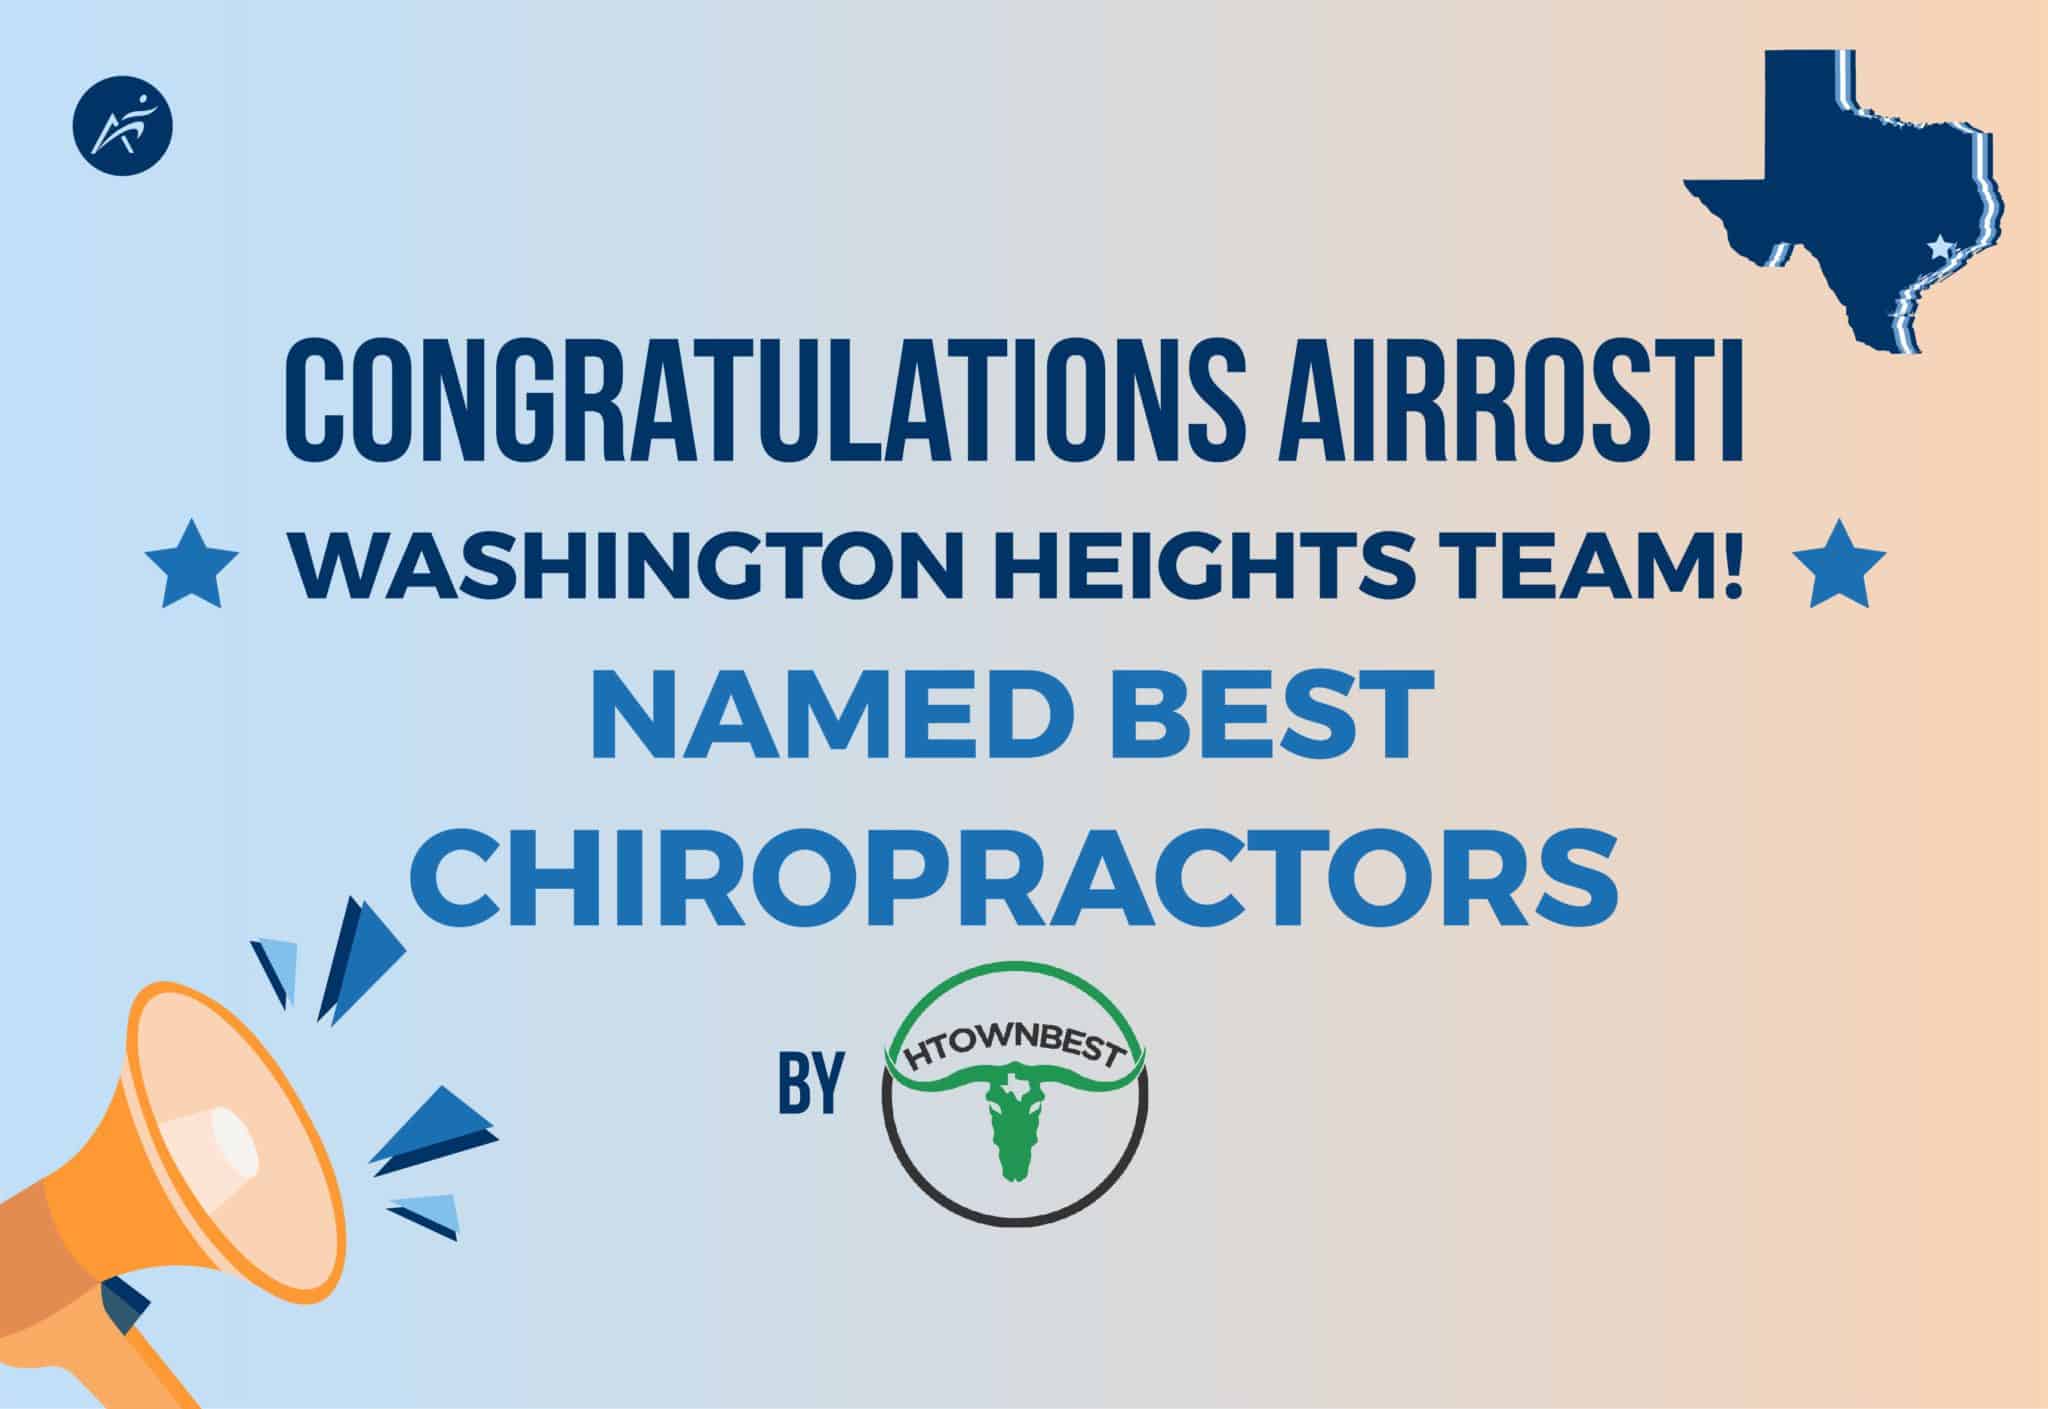 Washington Heights named best Chiropractors